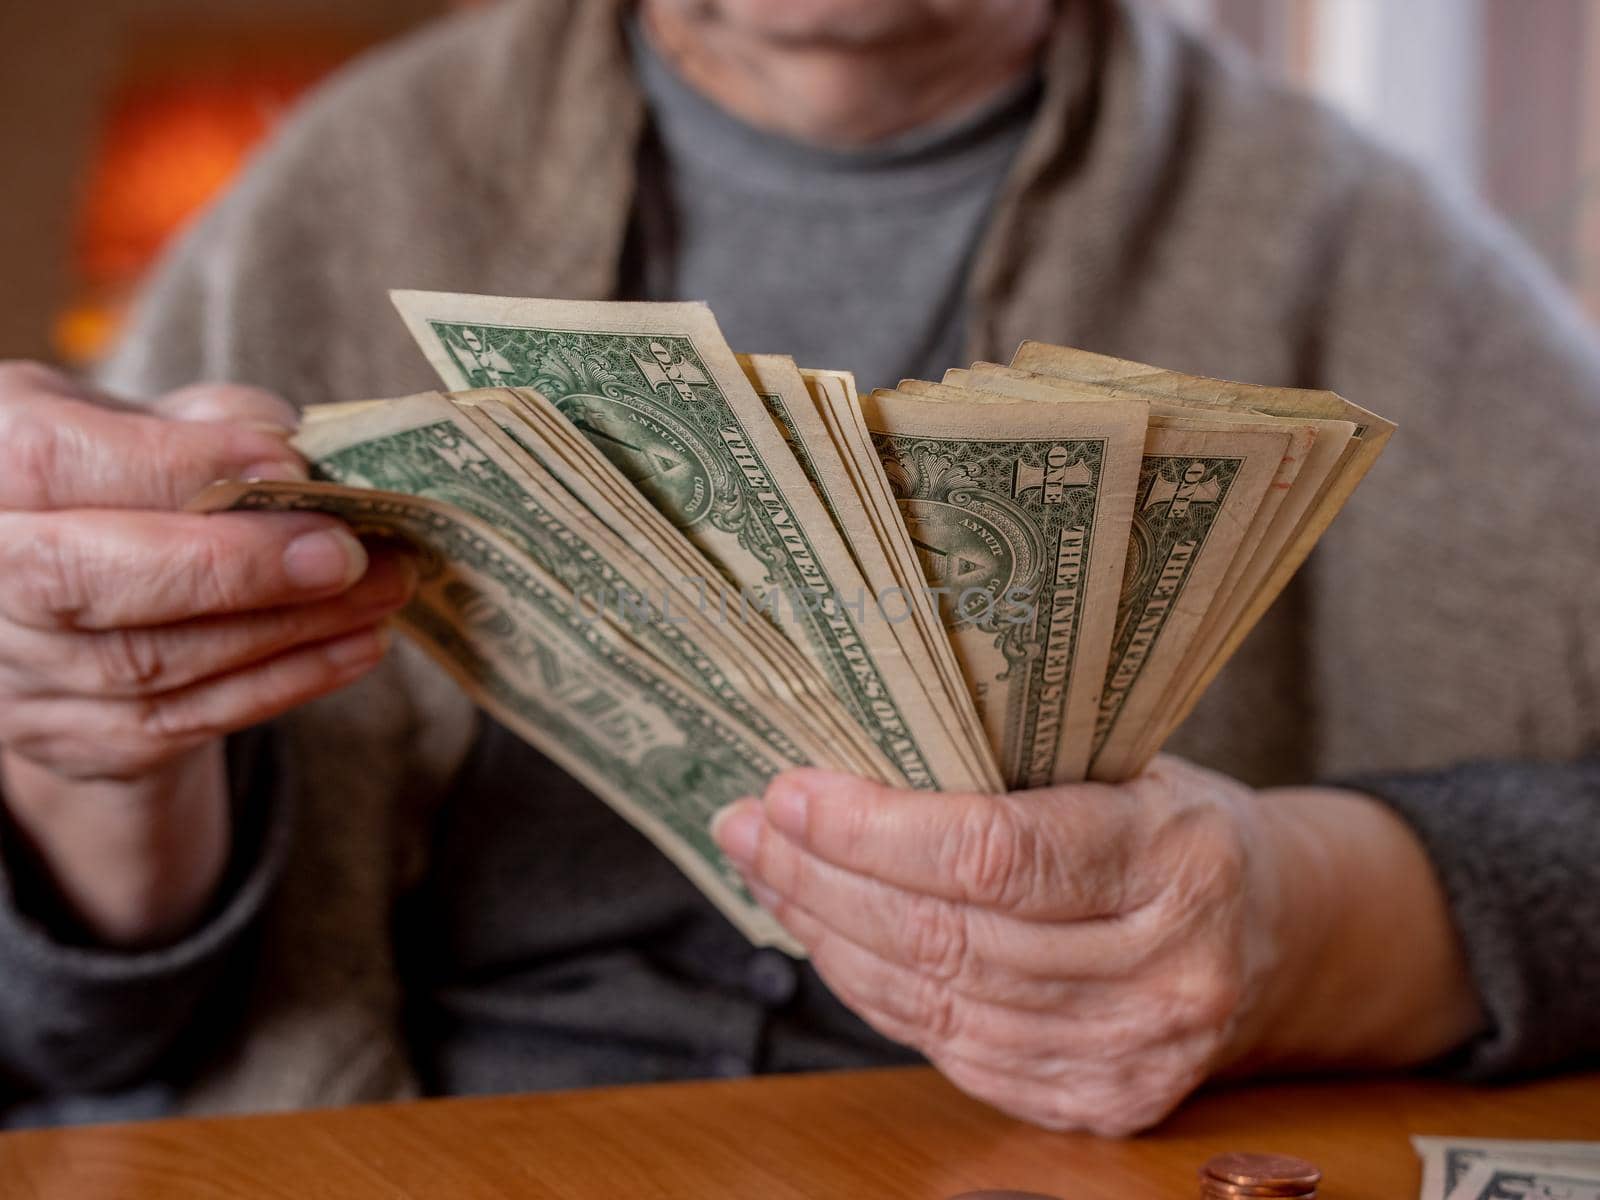 An elderly woman counts the remaining money. Economic crisis, poverty of the elderly. by Utlanov